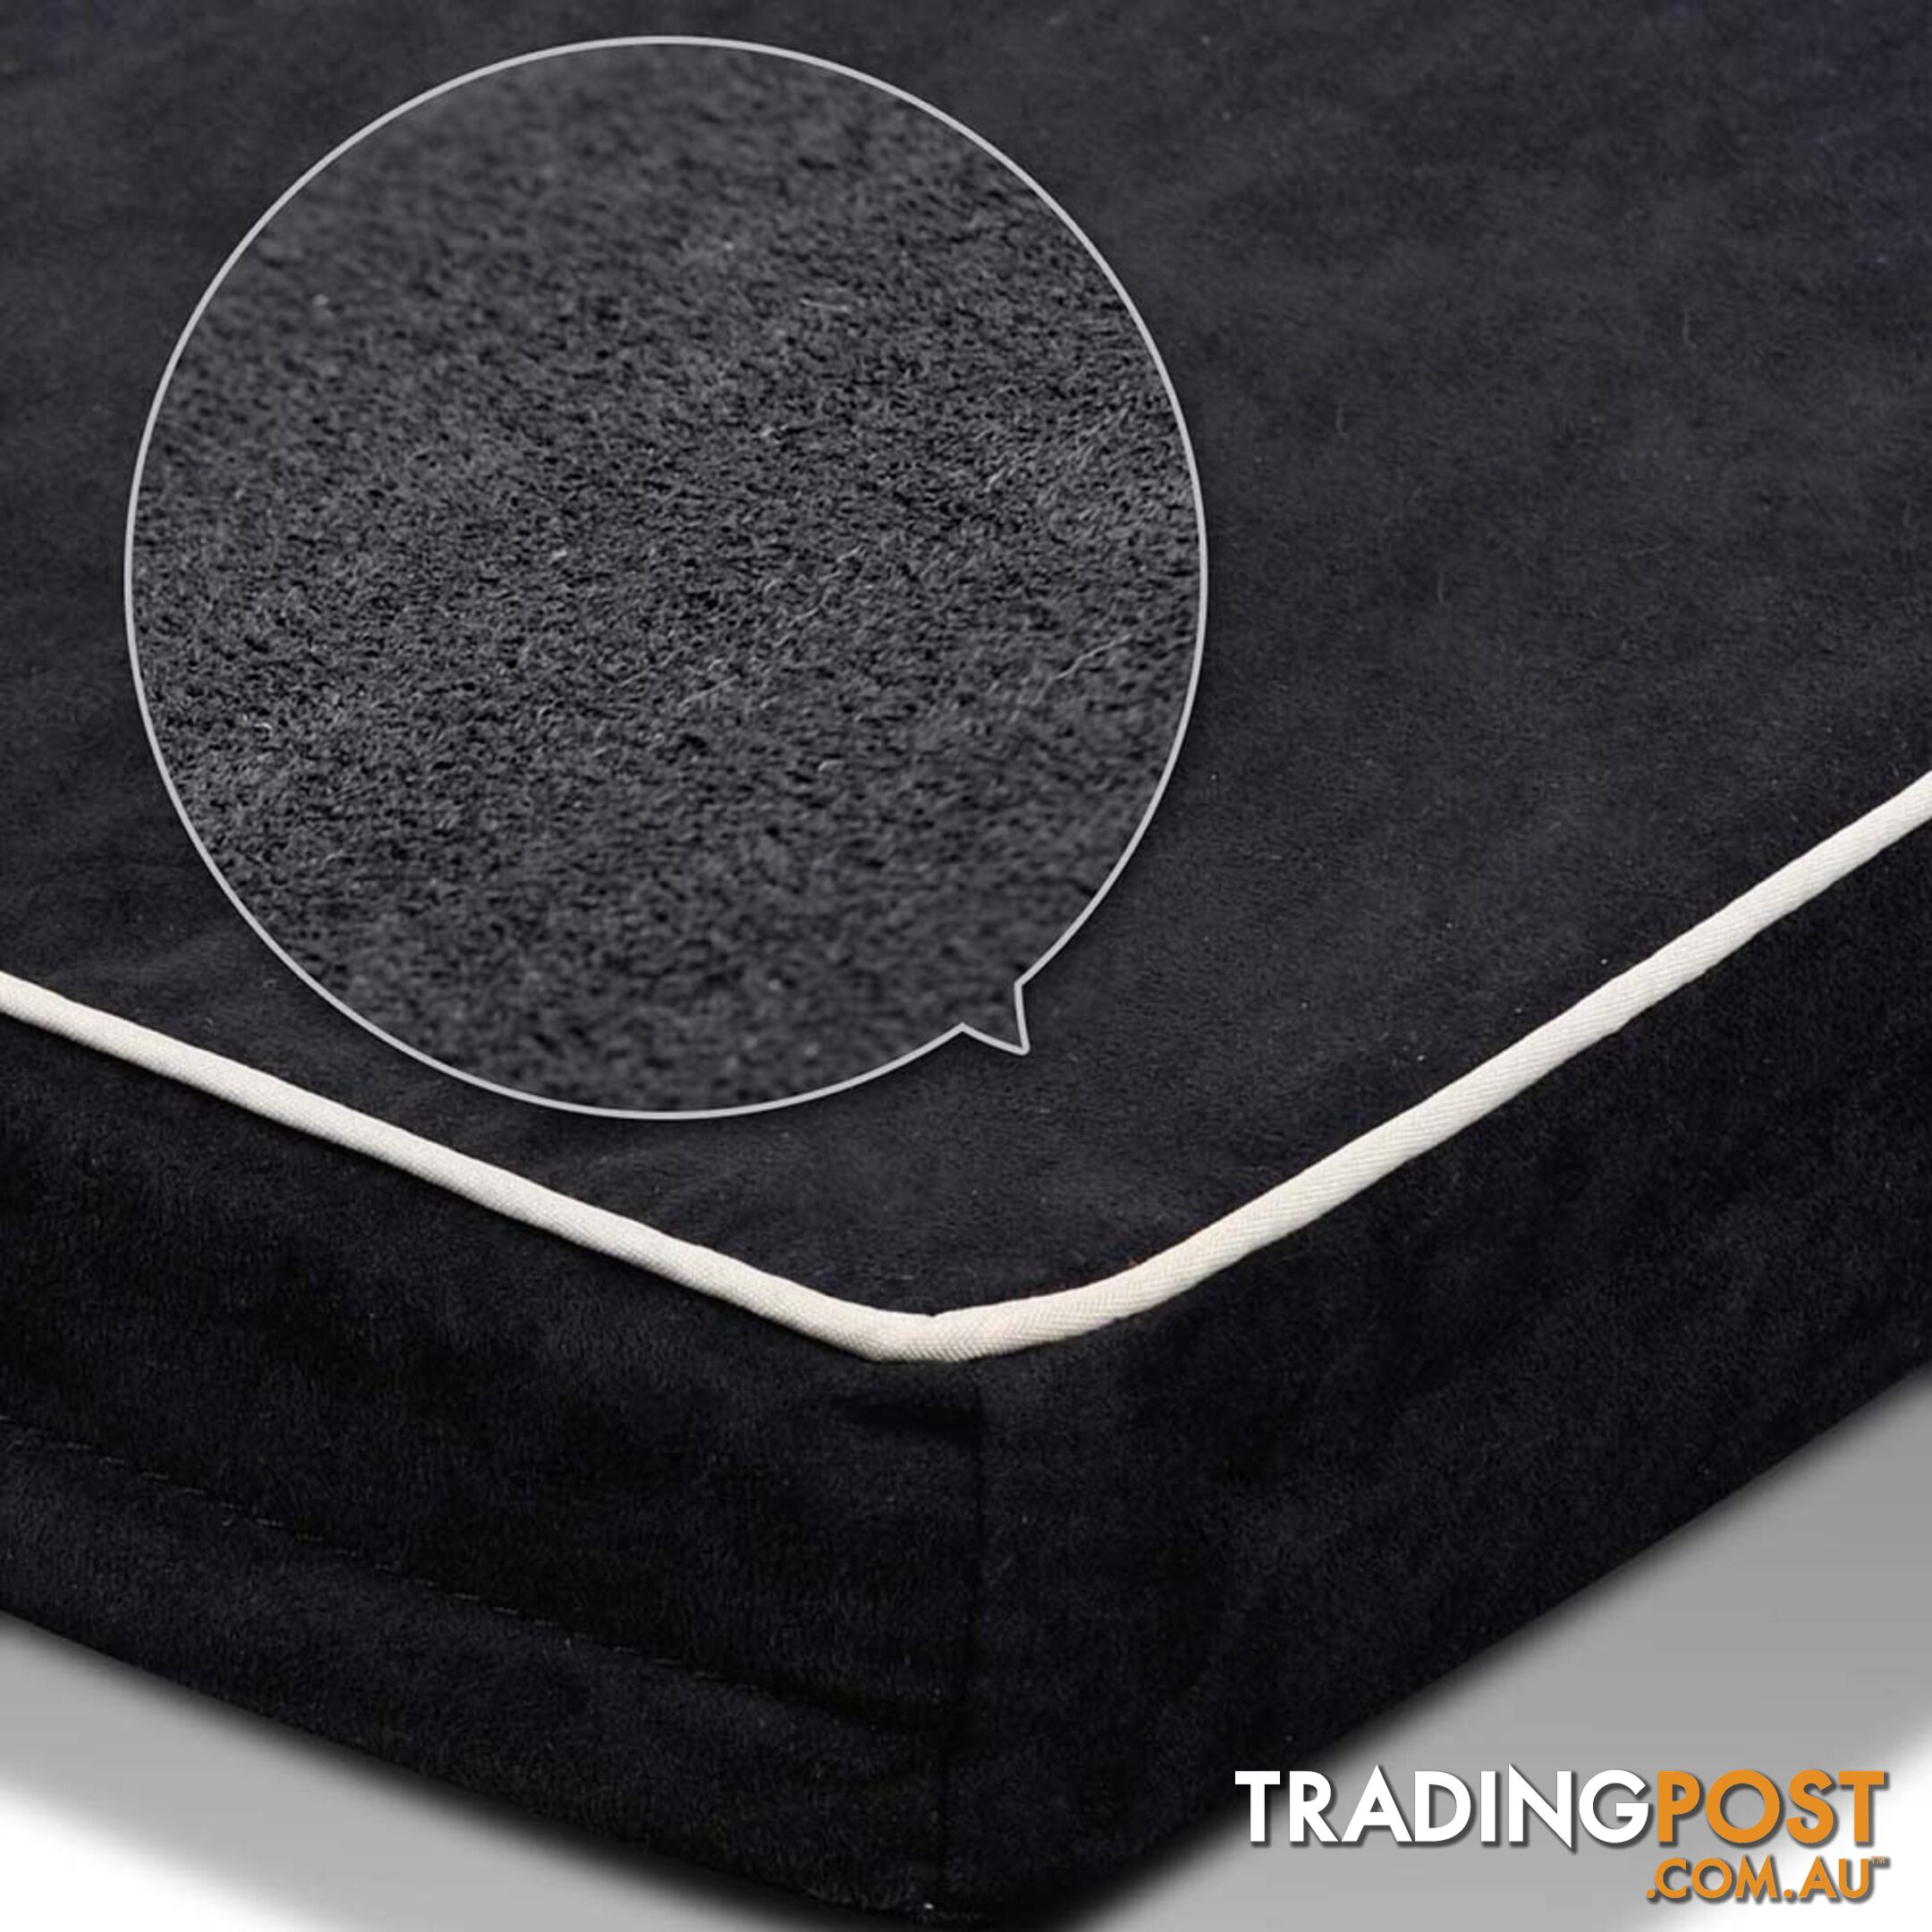 Pet Memory Foam Mattress Dog Bed Large Cat Sleep Pad Mat Anti Skid Black